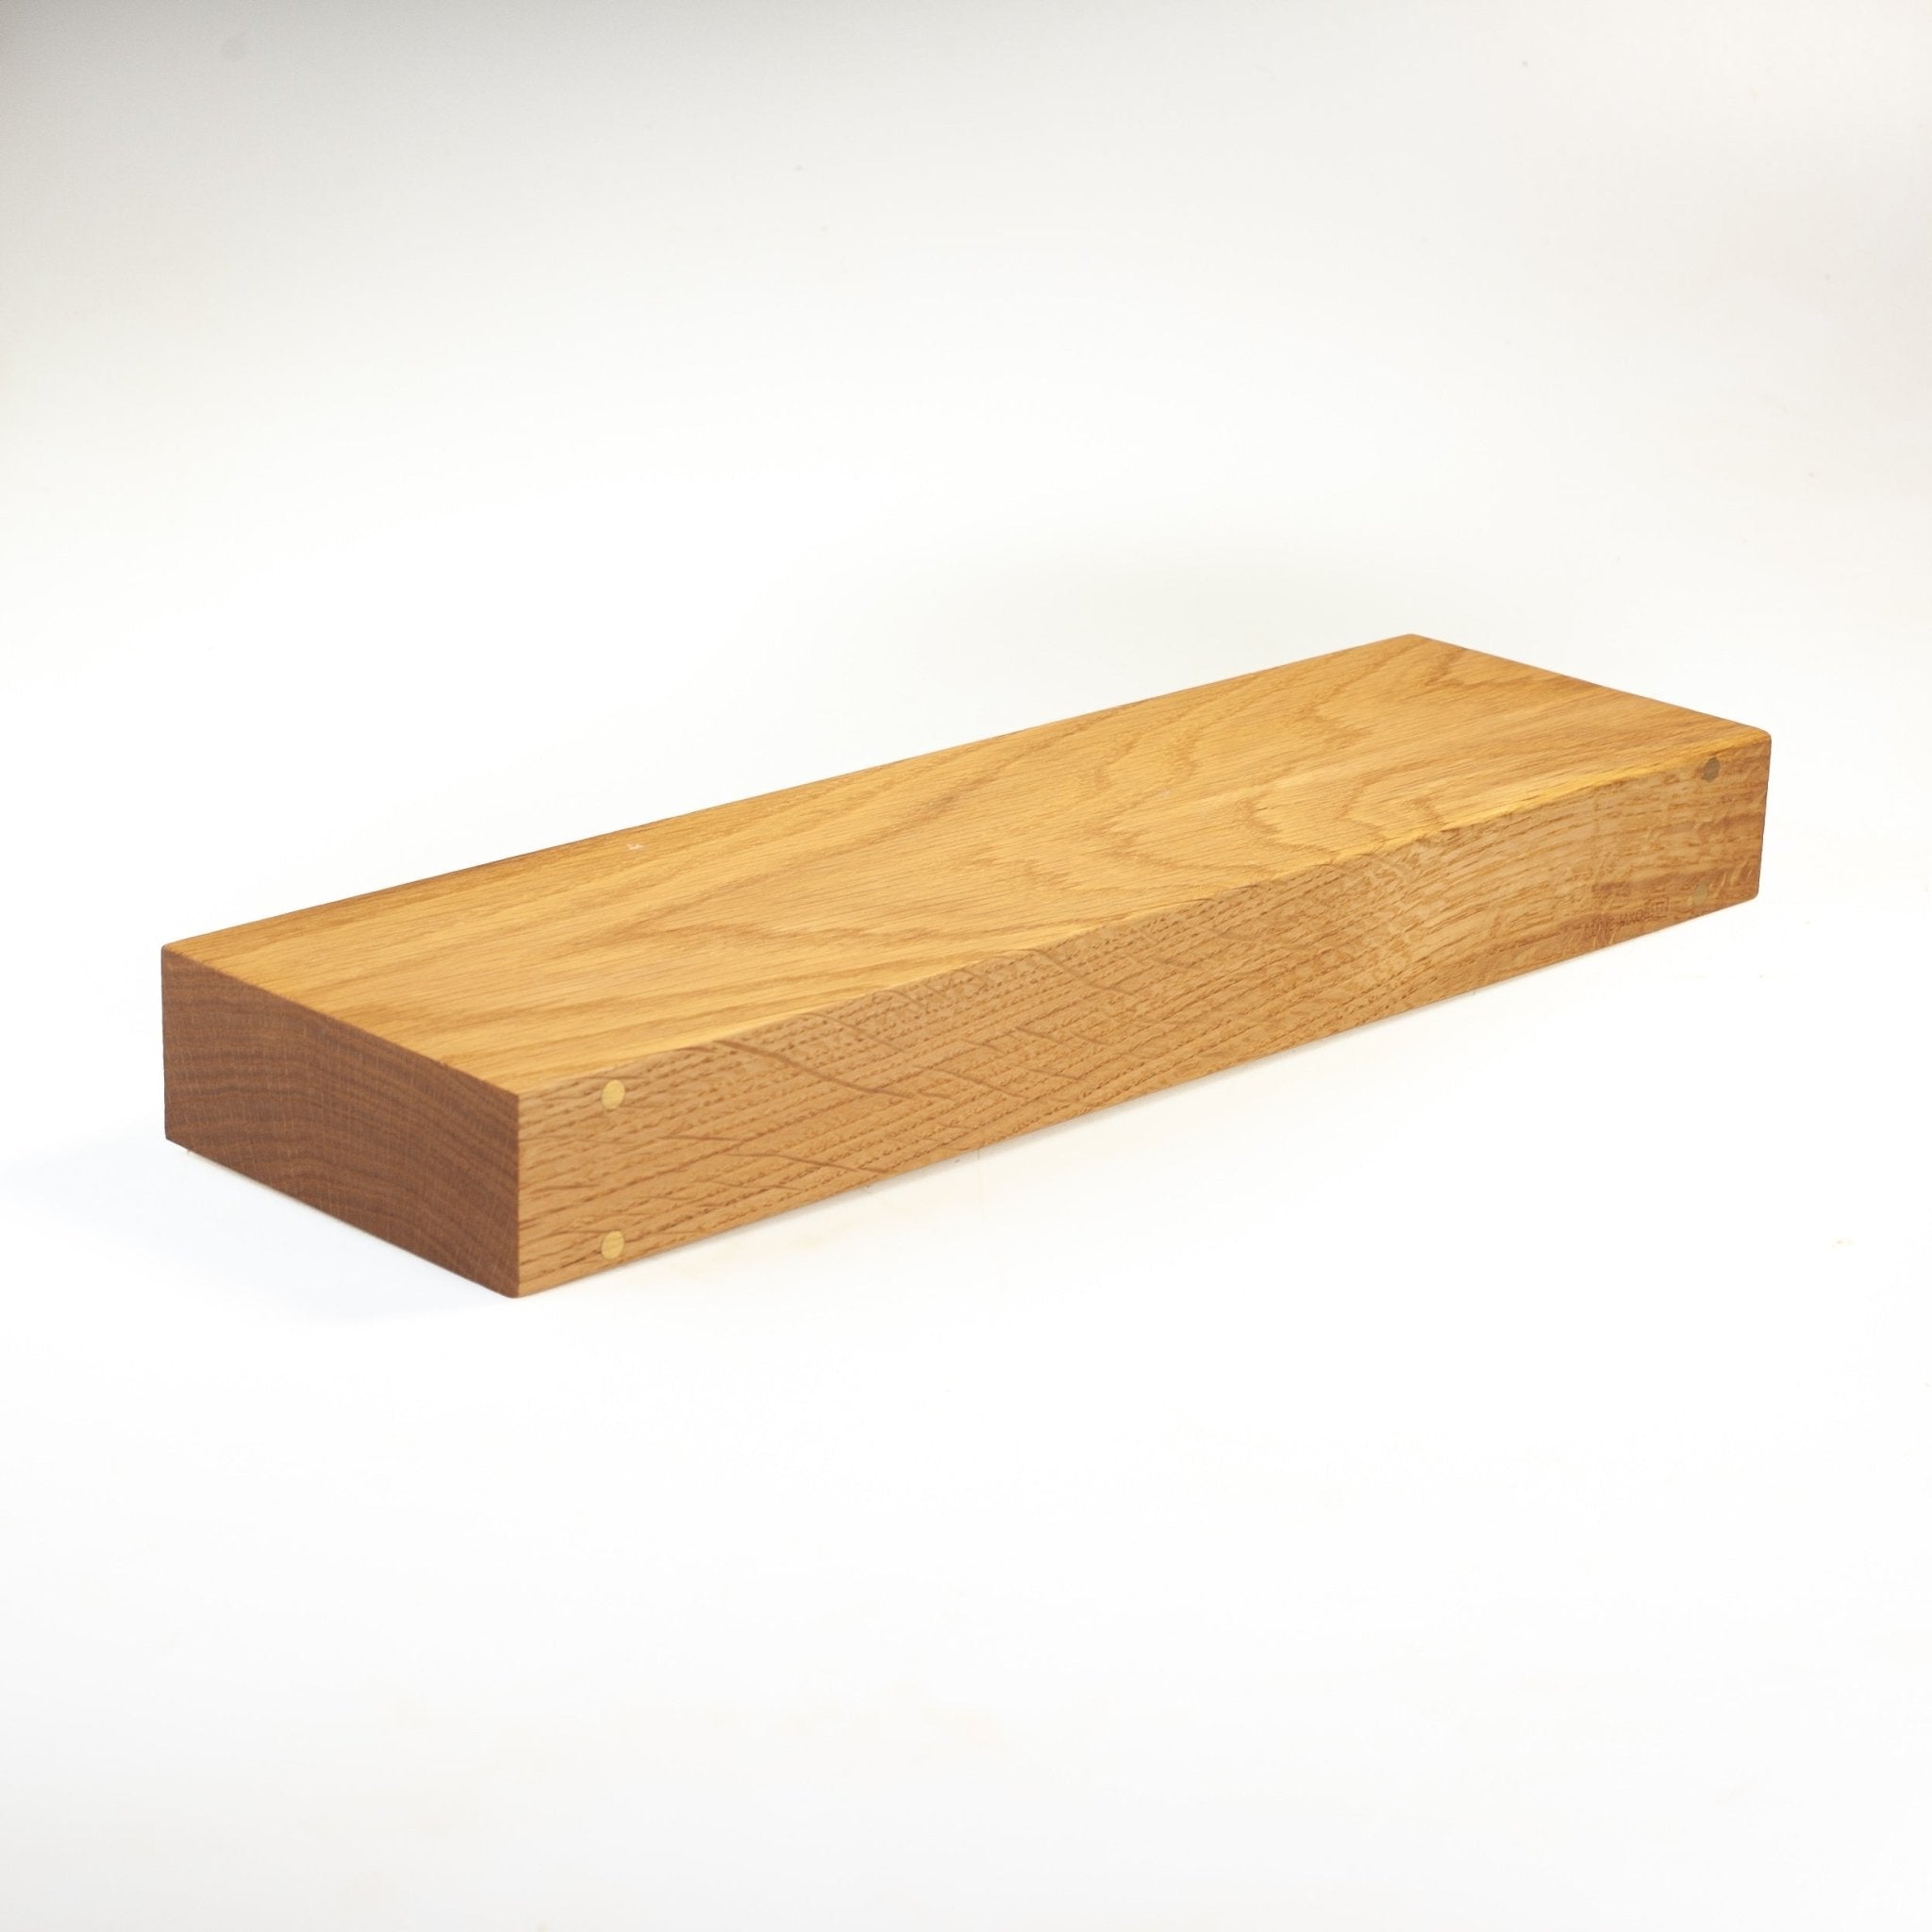 'OUTLET / Plankehylde 40cm, eg' by Rune-Jakobsen Design. Explore our large selction of